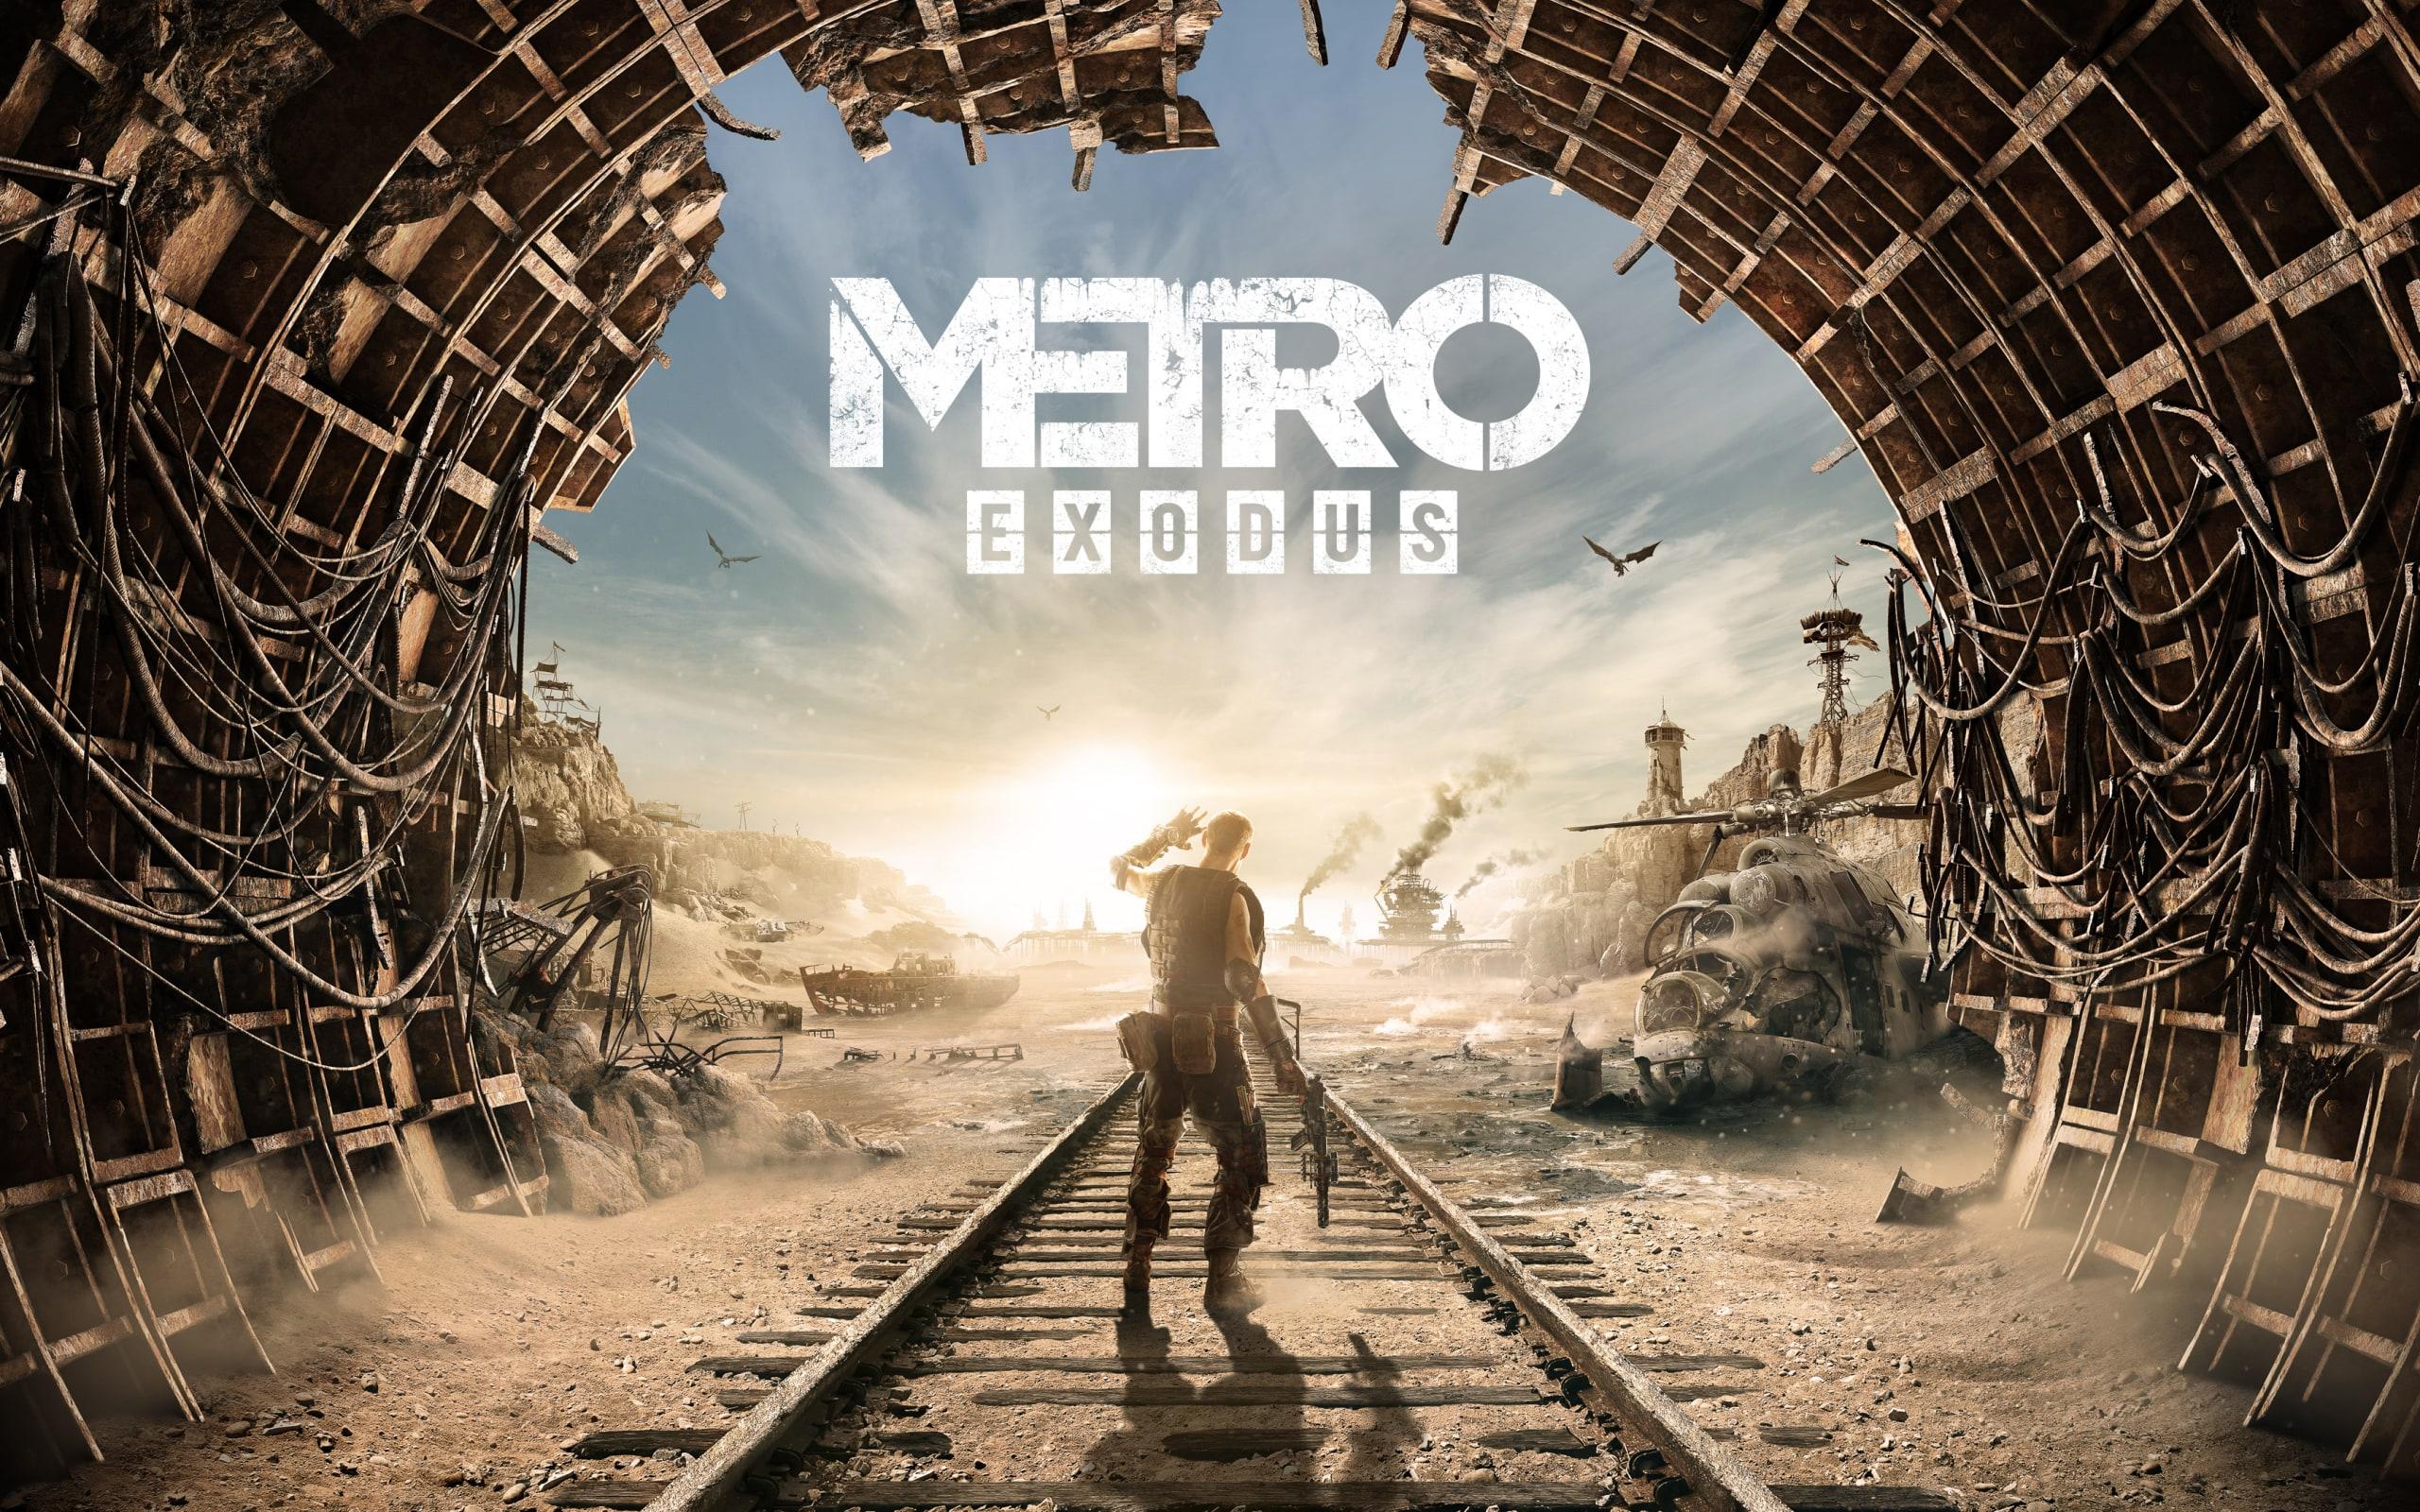 Wallpaper of Metro Exodus, Poster, Video Game, Artem background & HD